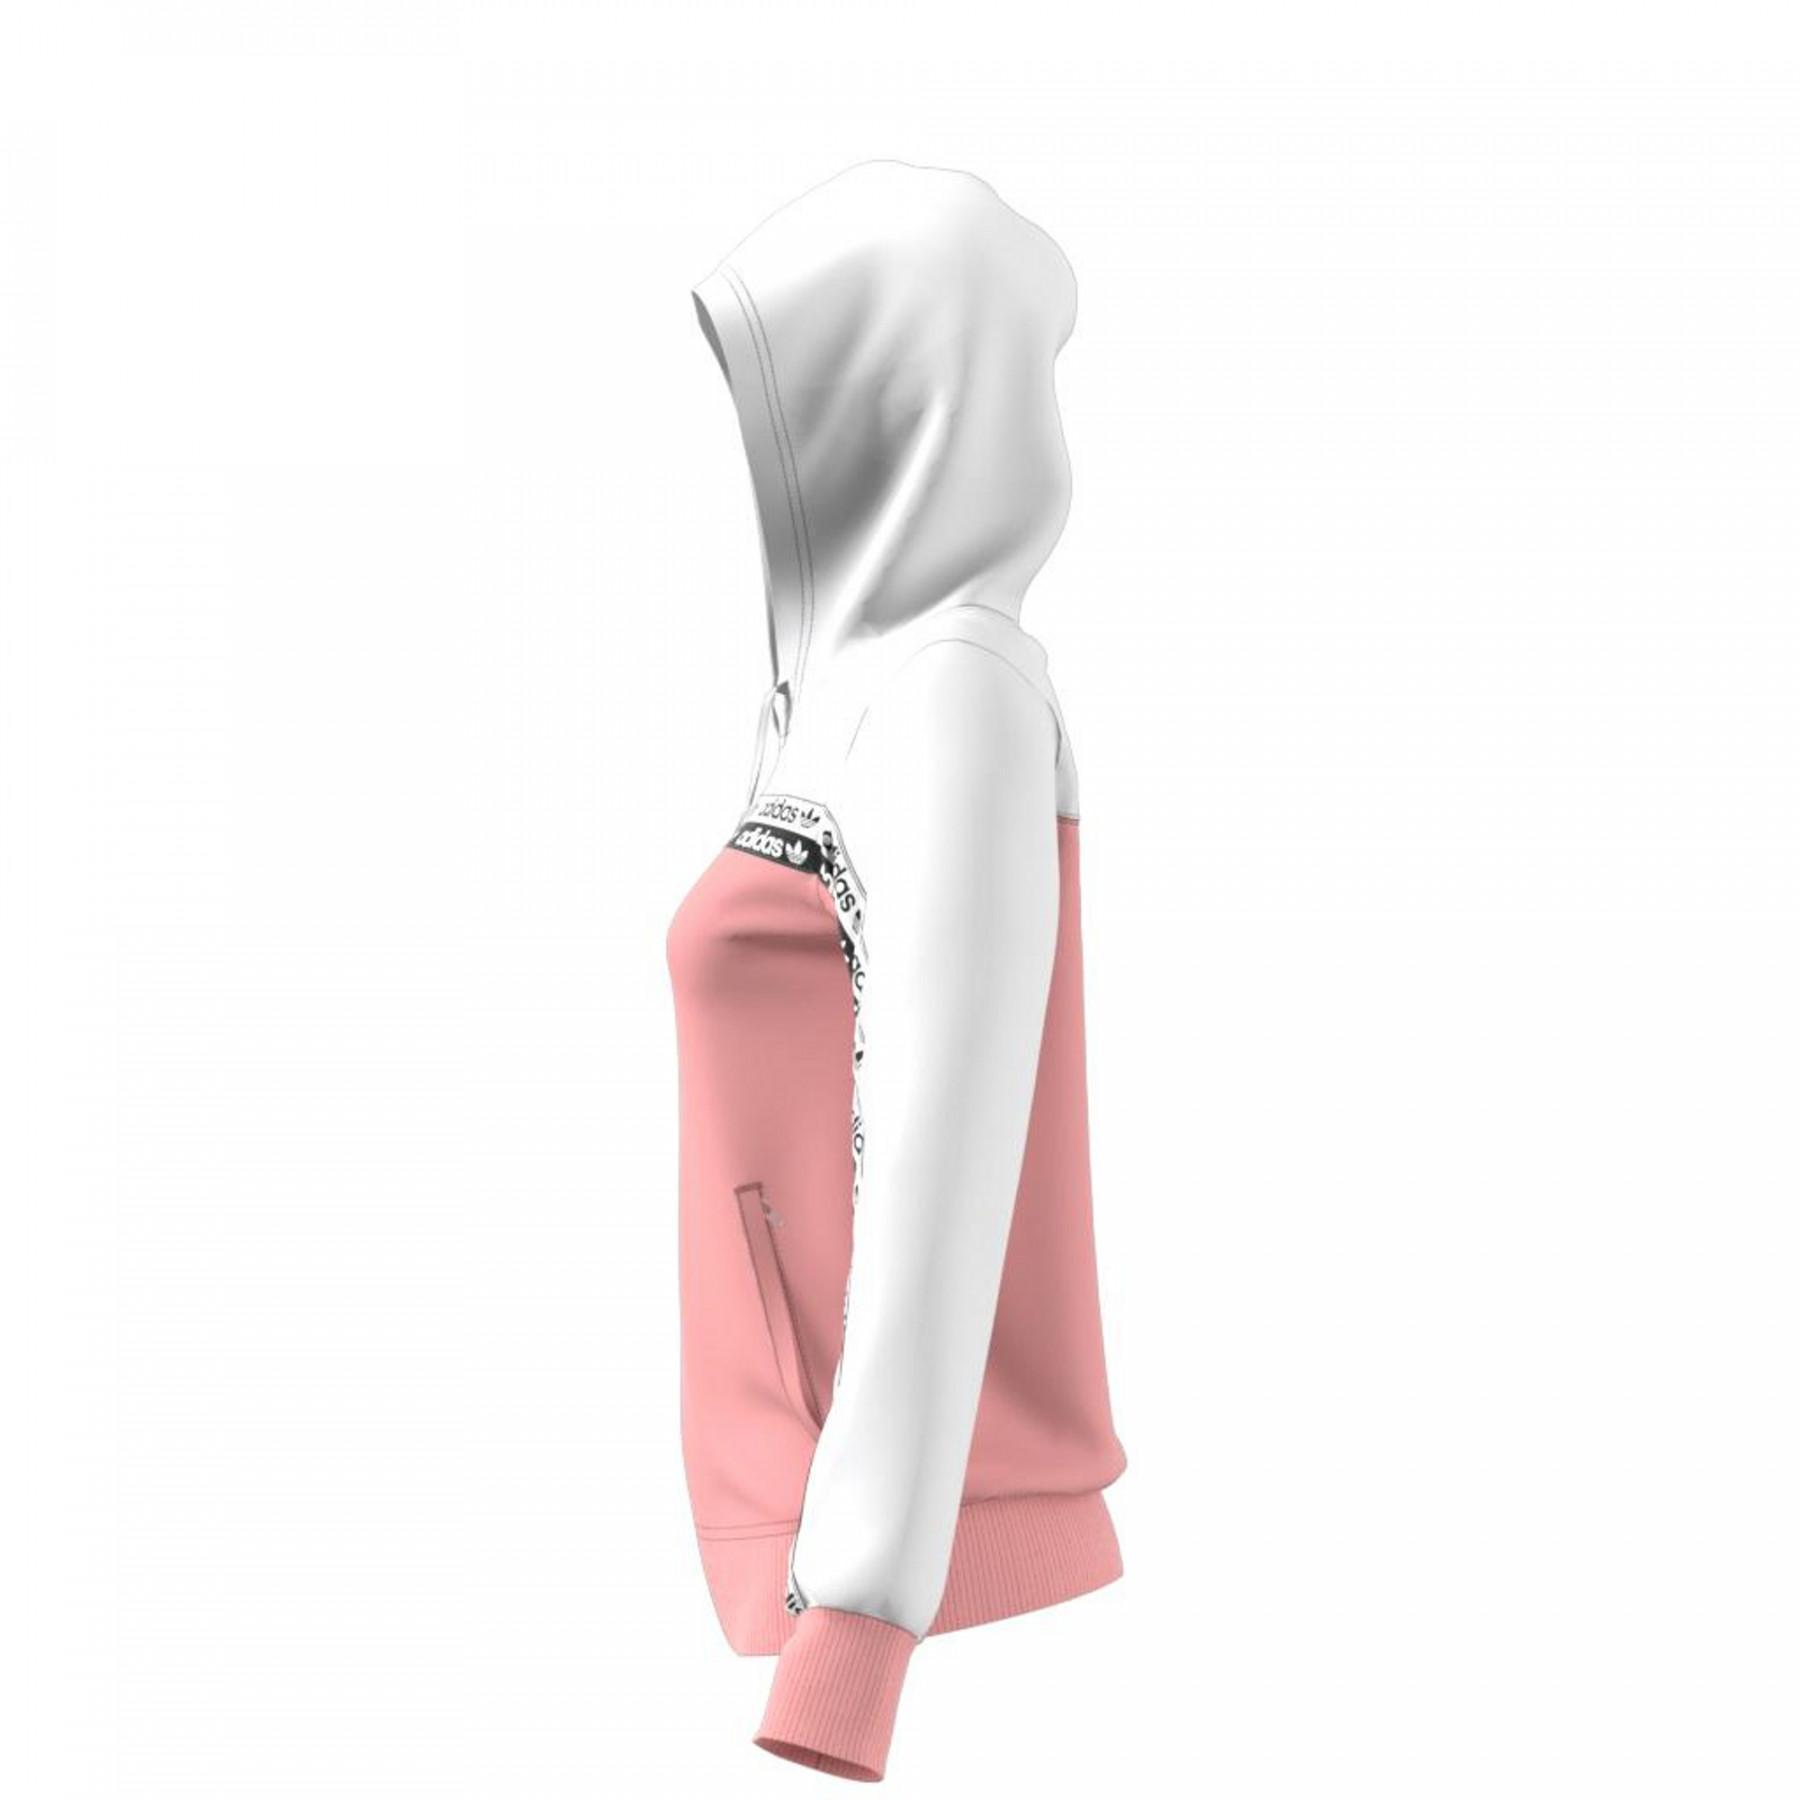 Sweatshirt à capuche femme adidas Tape Track